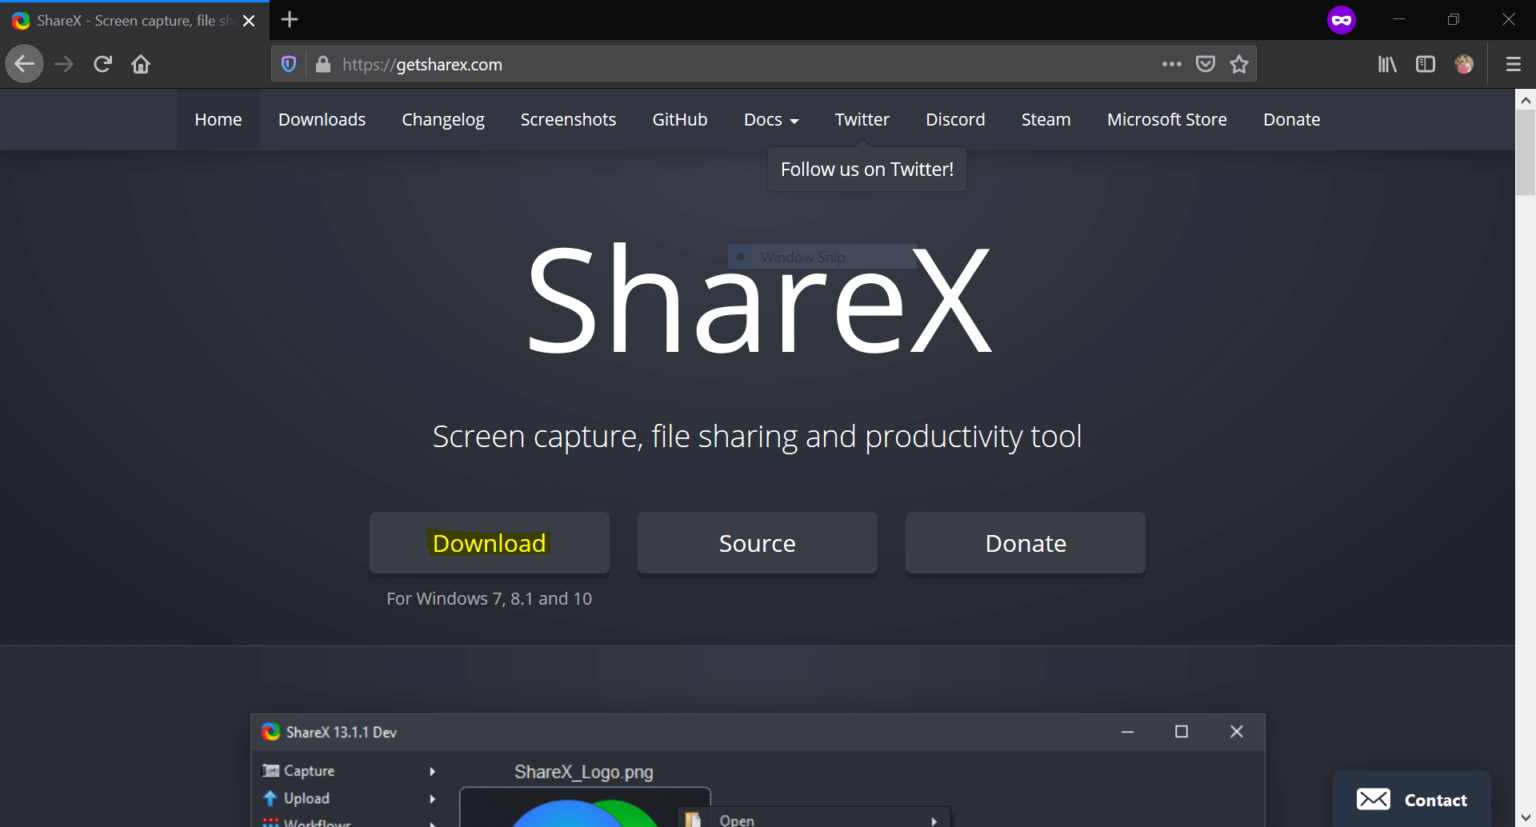 sharex screenshot delay 12.4.1